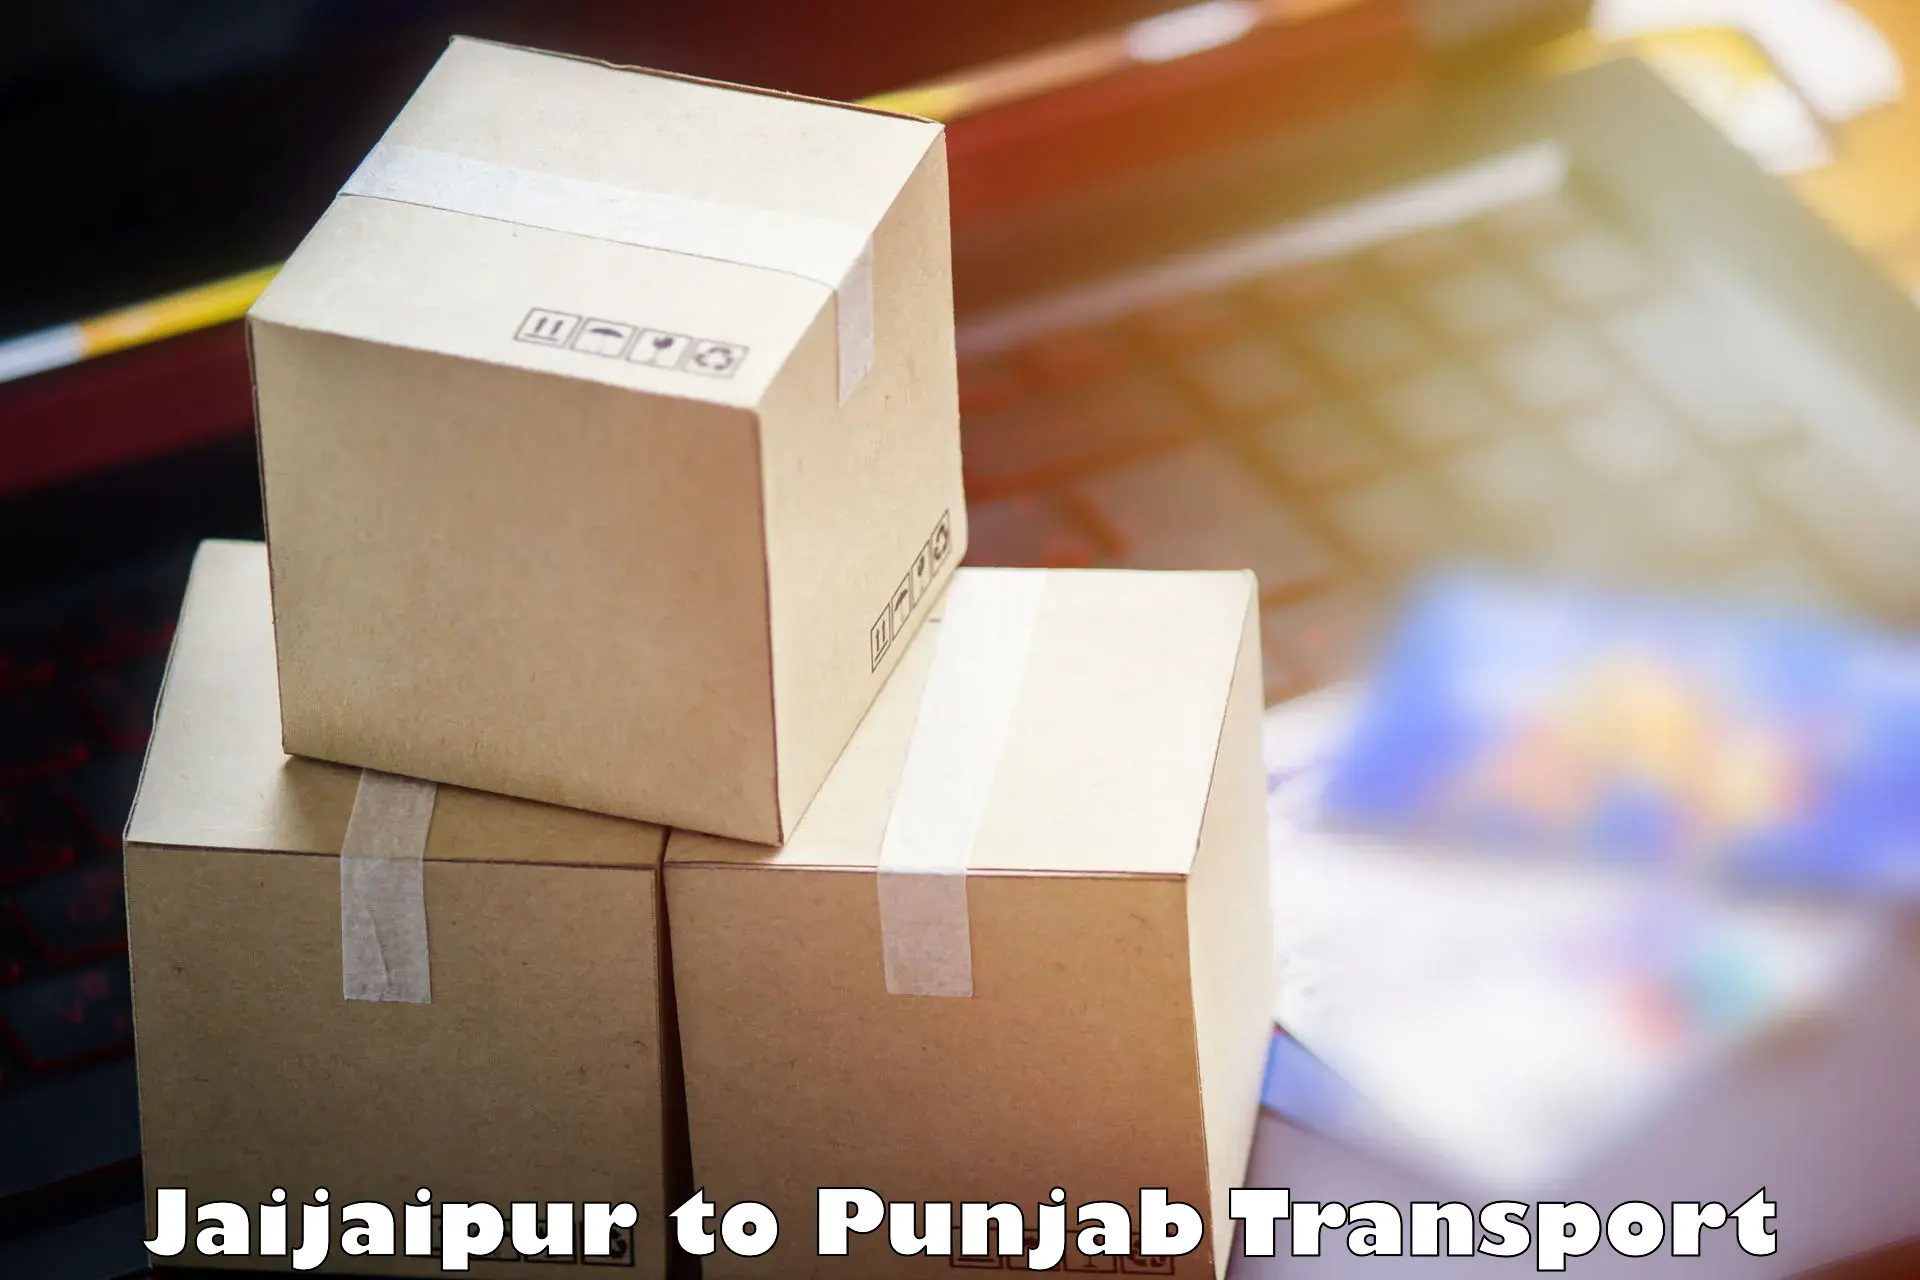 Lorry transport service Jaijaipur to Amritsar